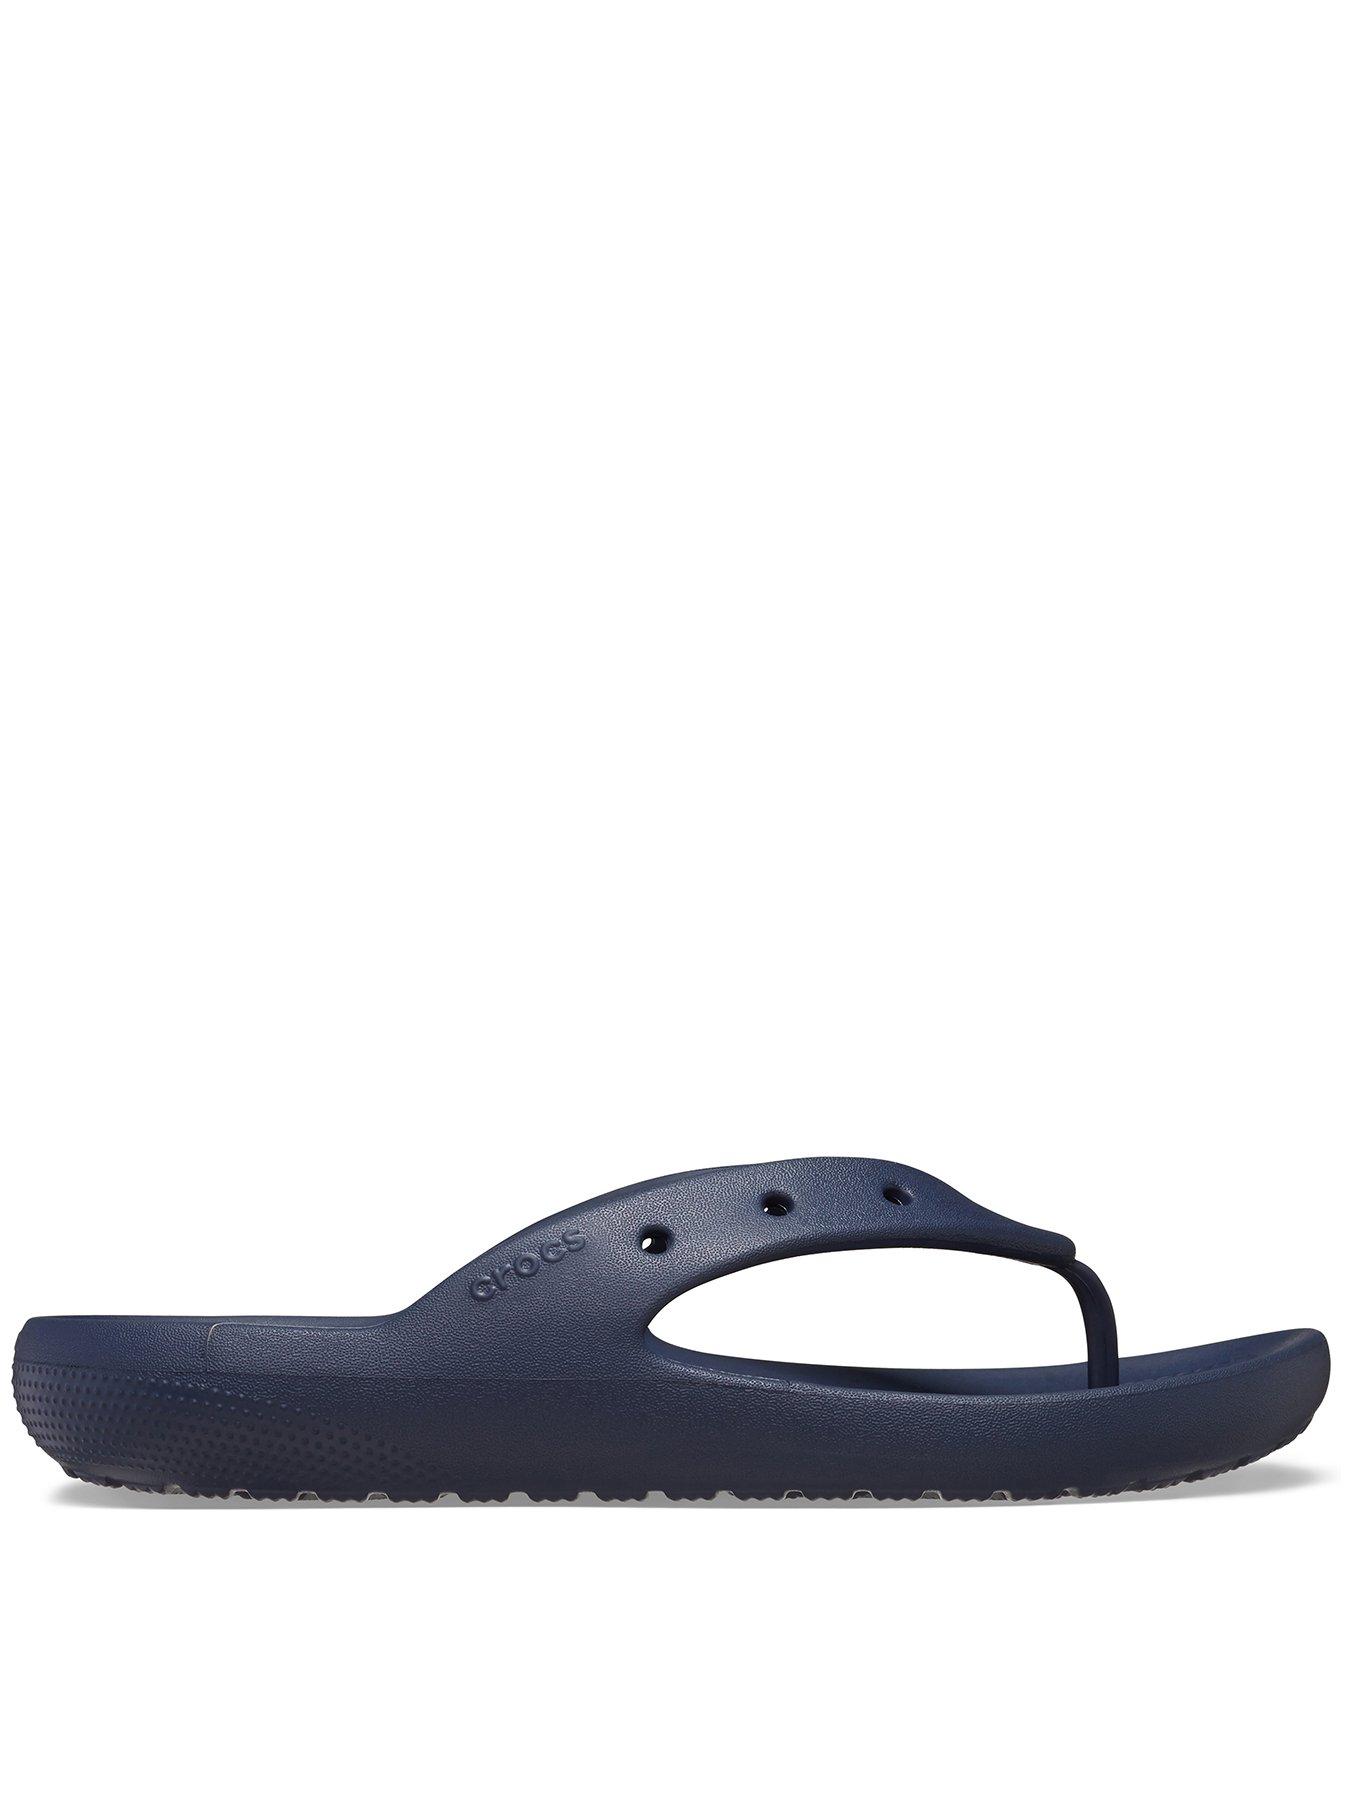 Crocs Classic Flip Sandal - Navy, Blue, Size 8, Women